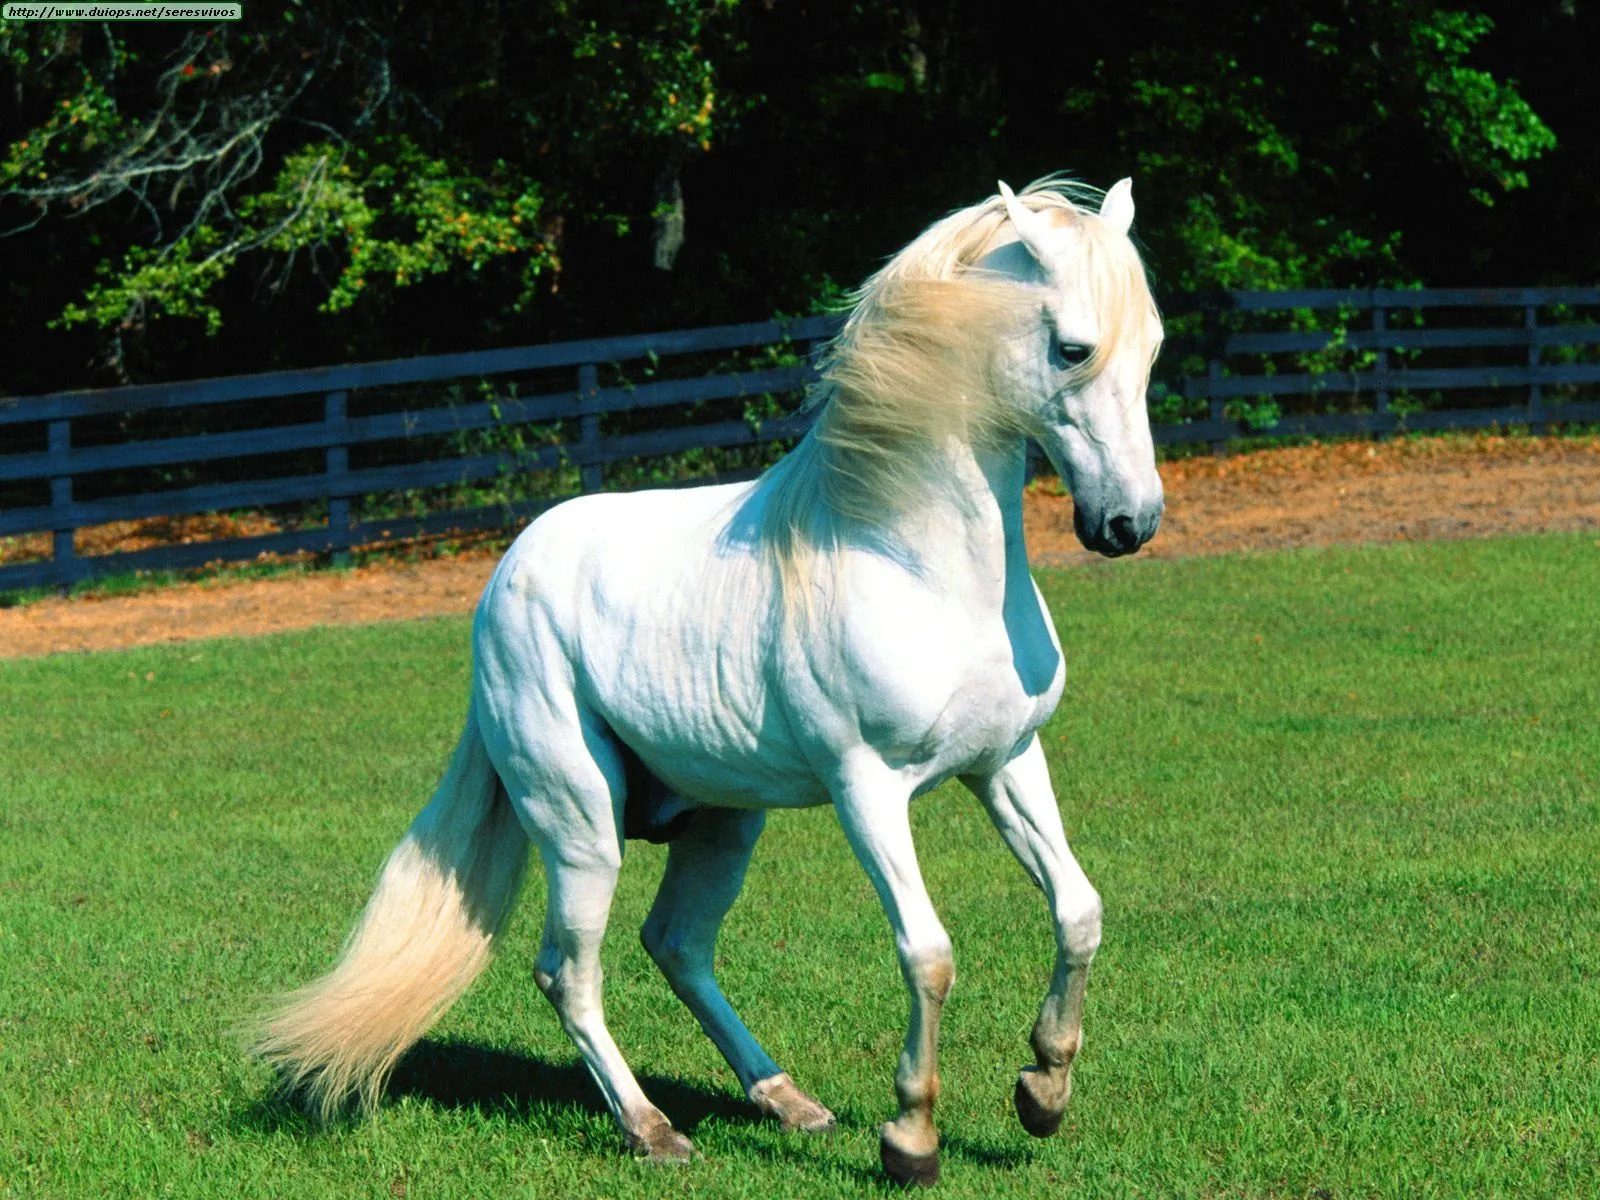 caballosandaluces: caballo blanco muy bonito